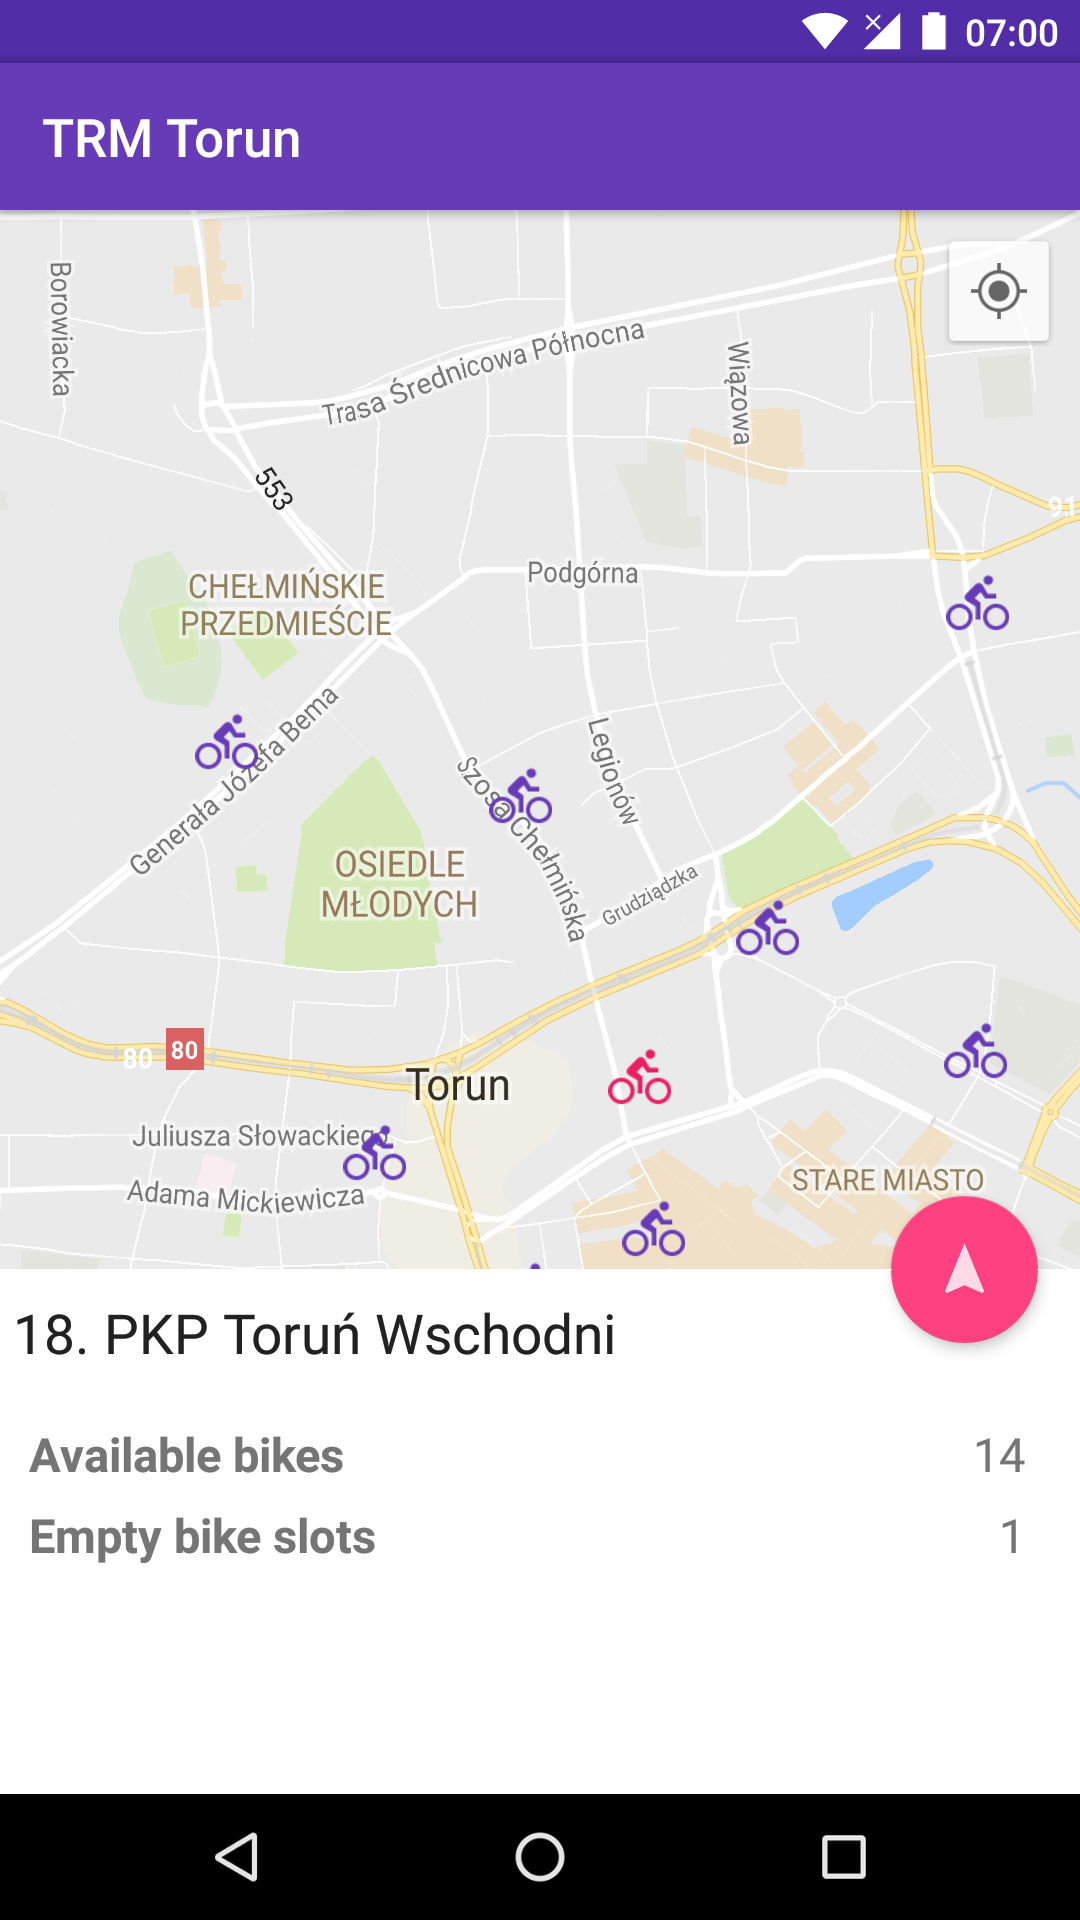 TRM Torun Android app bike station information